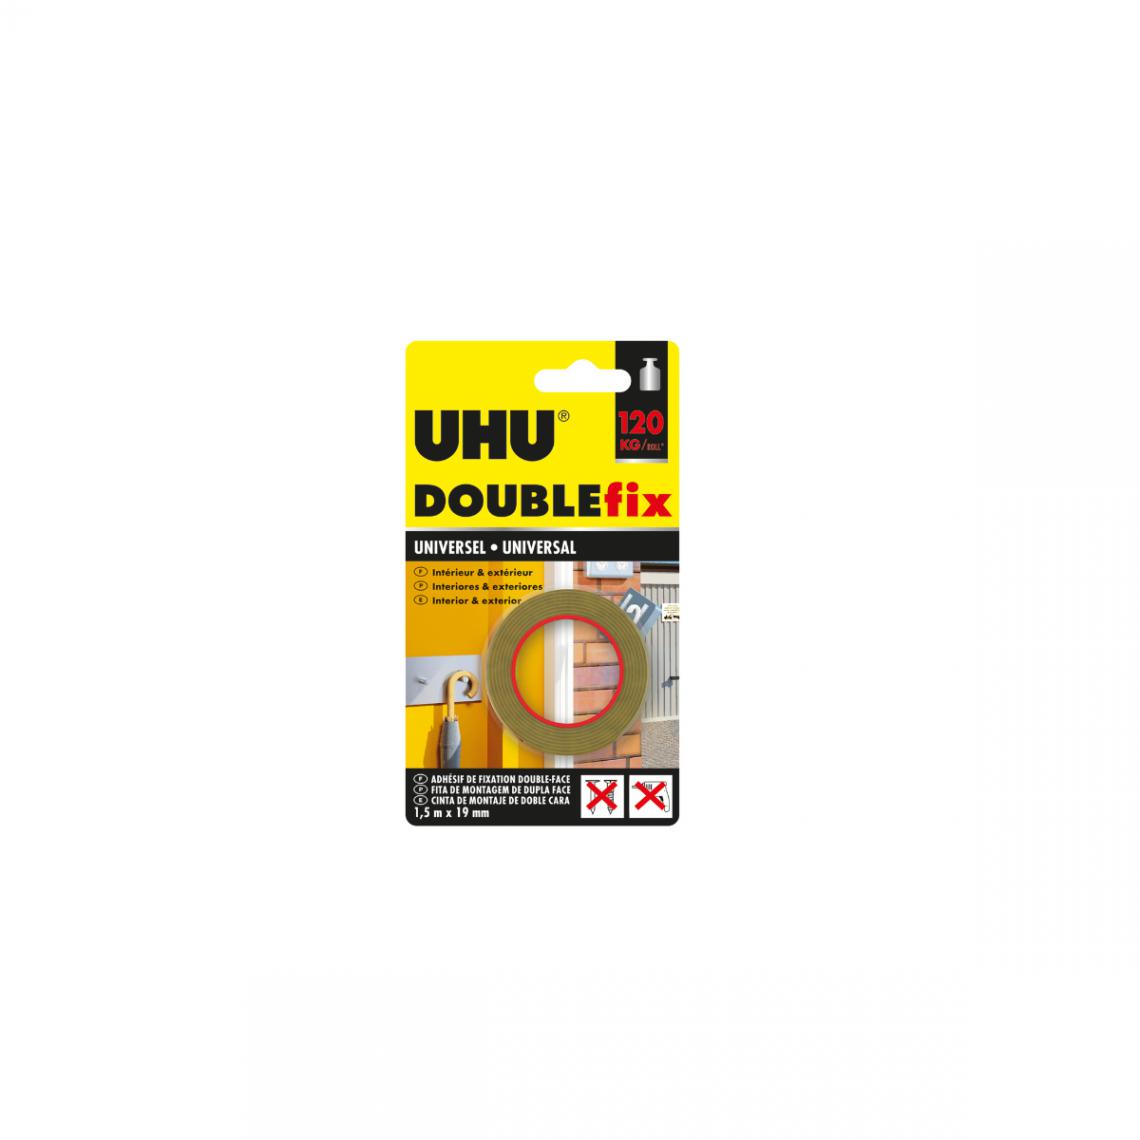 Uhu - Ruban adhésif UHU Doublefix Universel - 1,5m x 19mm - 36495 - Colle & adhésif